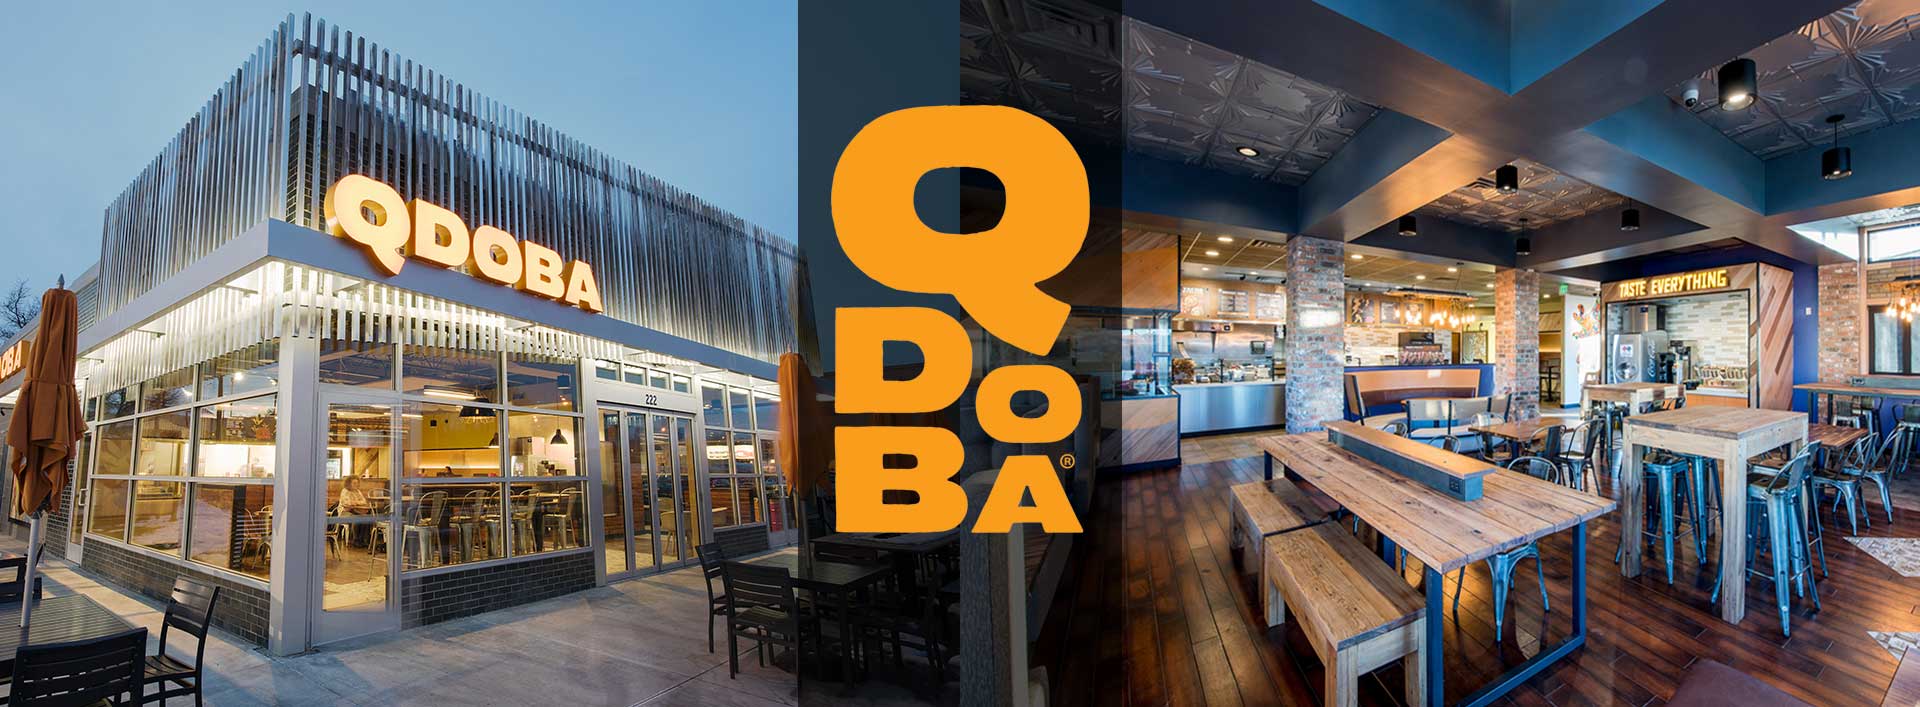 QDOBA Logo Large